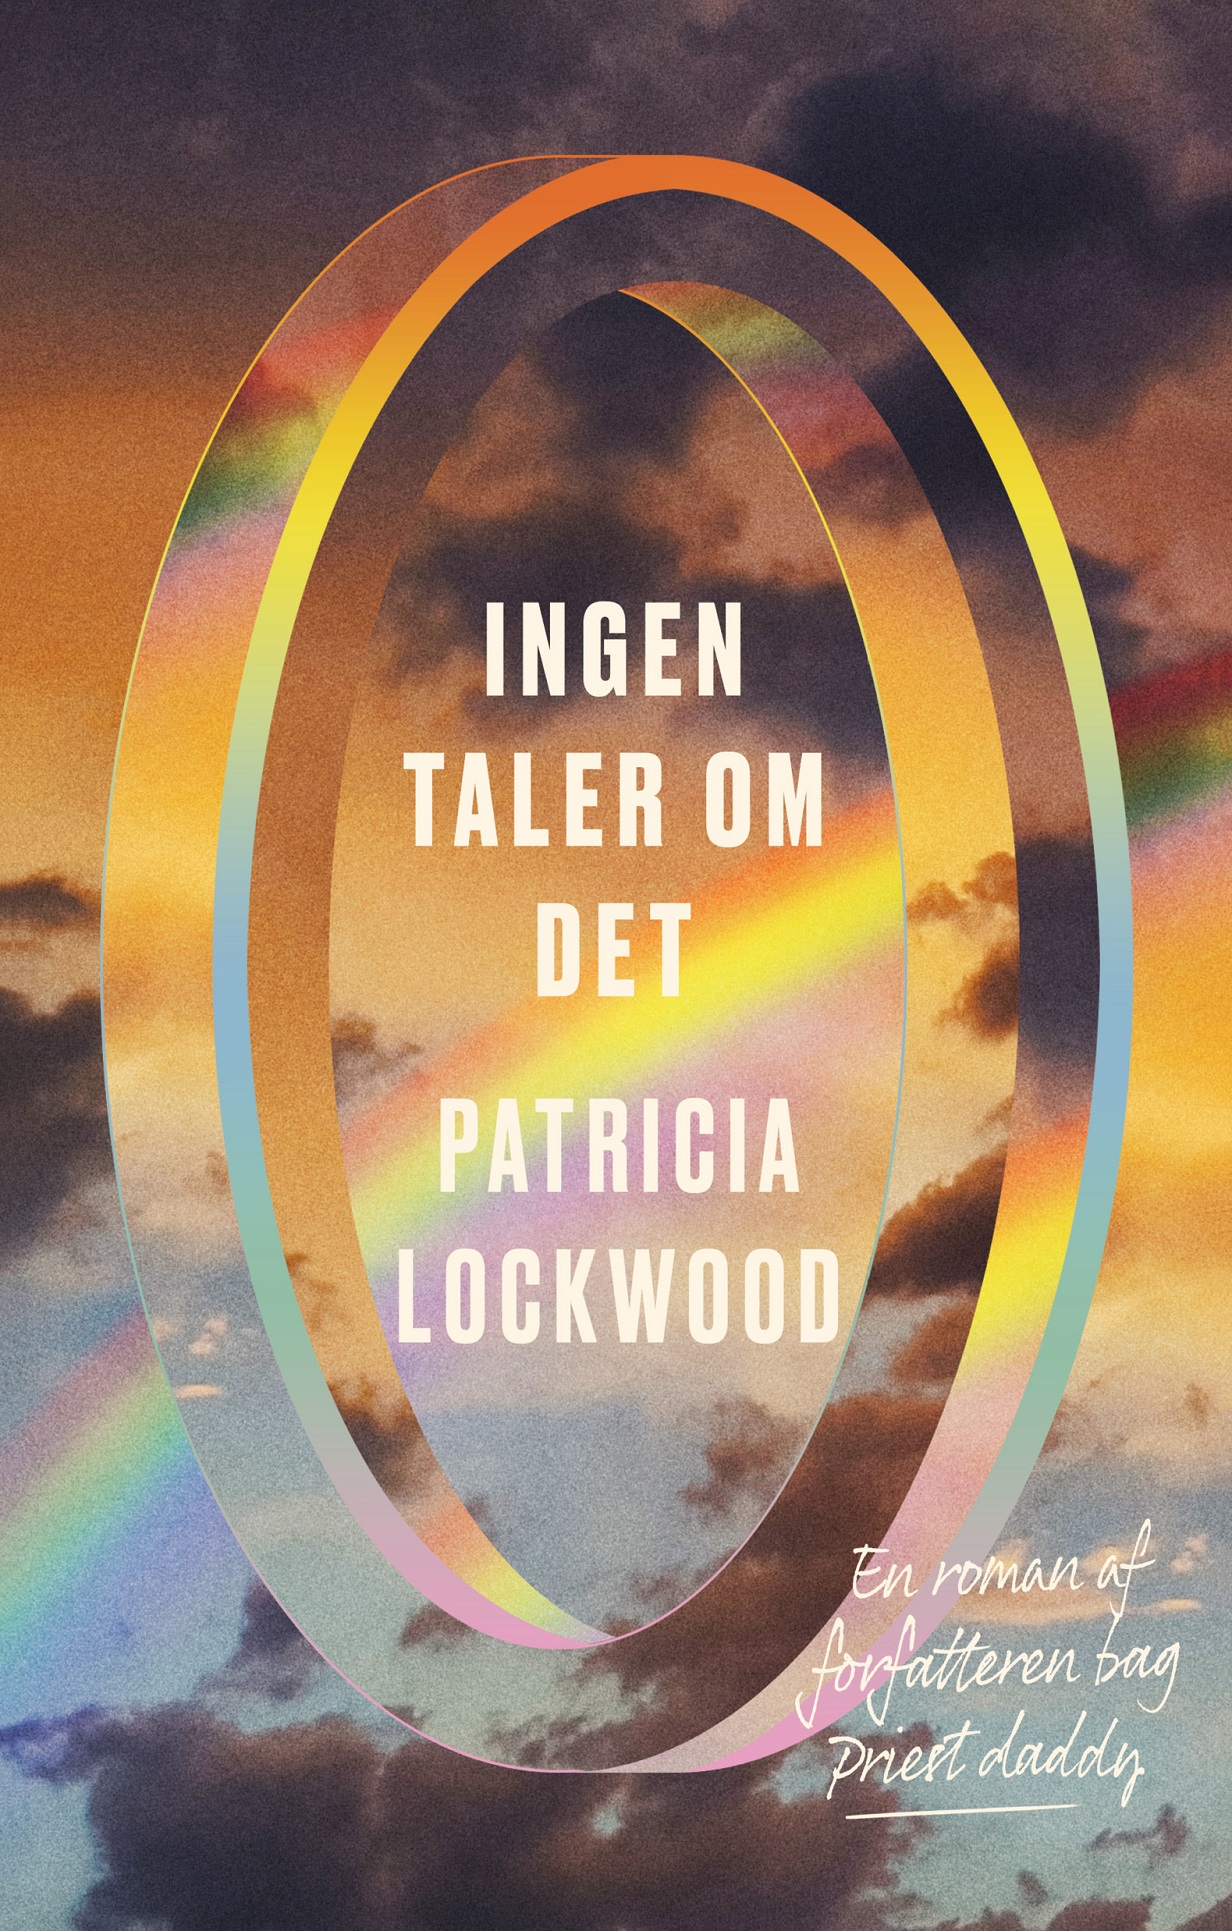 Den digitale verden smelter sammen med den virkelige i Patricia Lockwoods debutroman